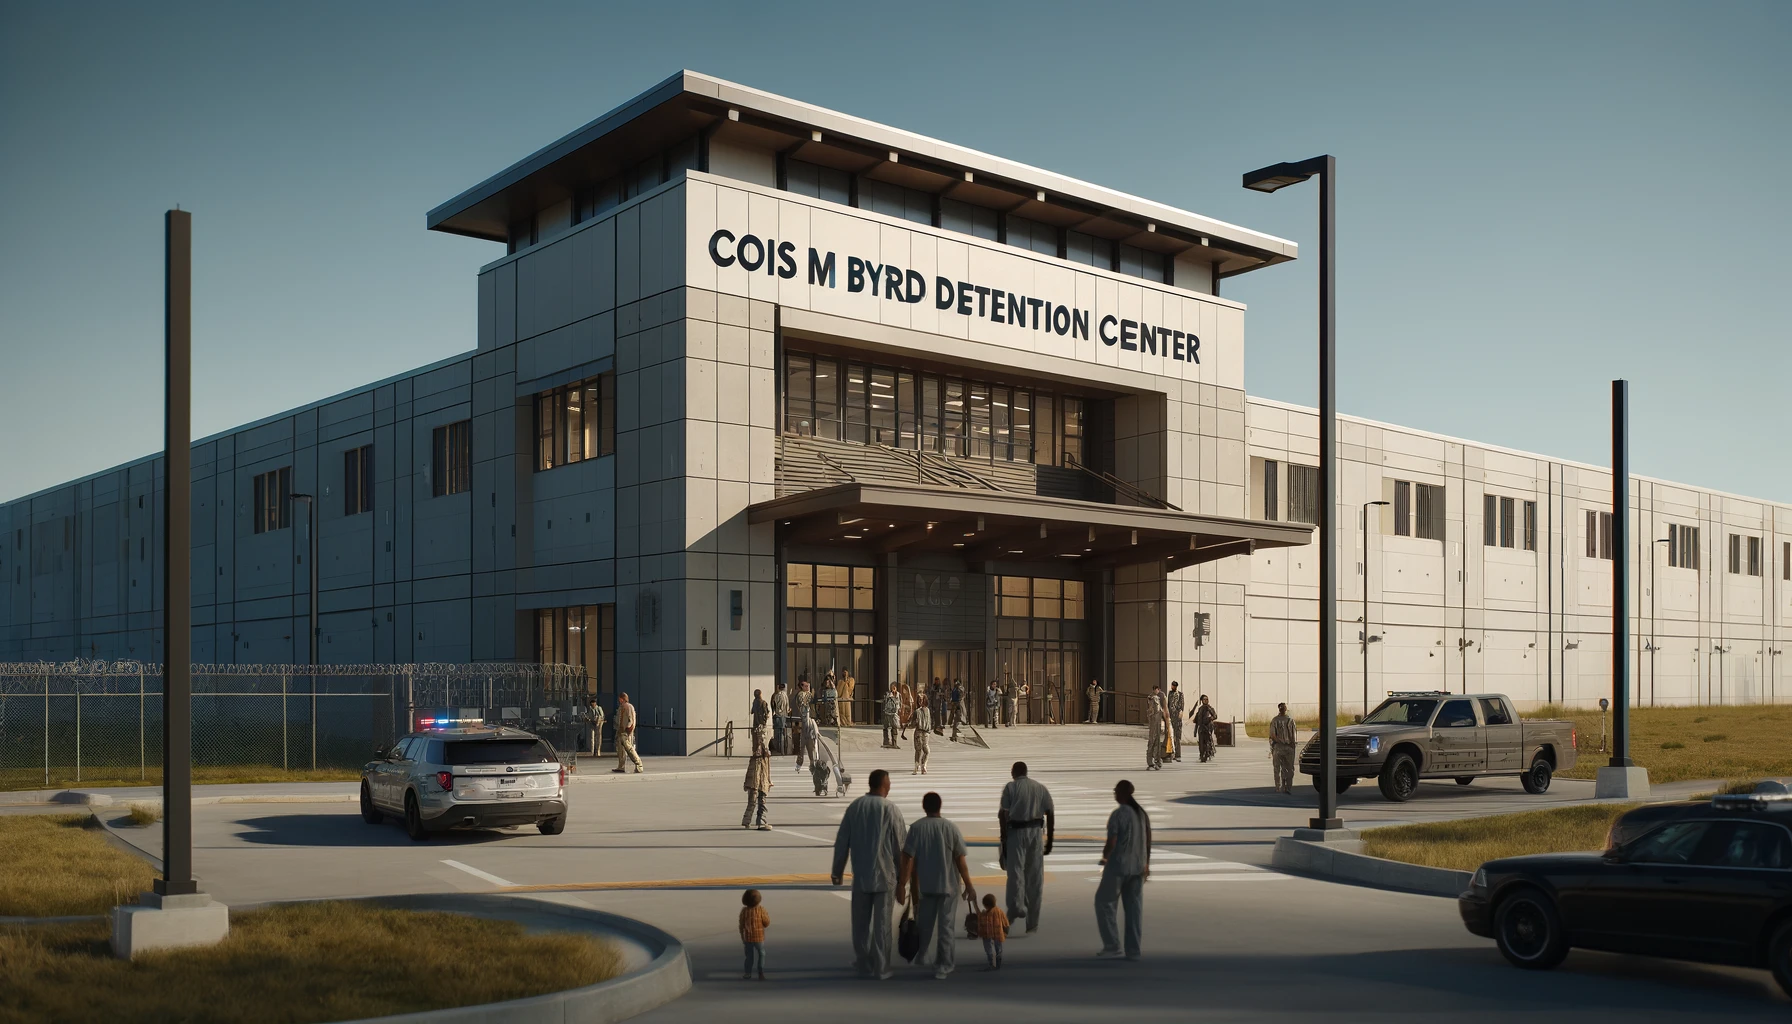 the Cois M Byrd Detention Center